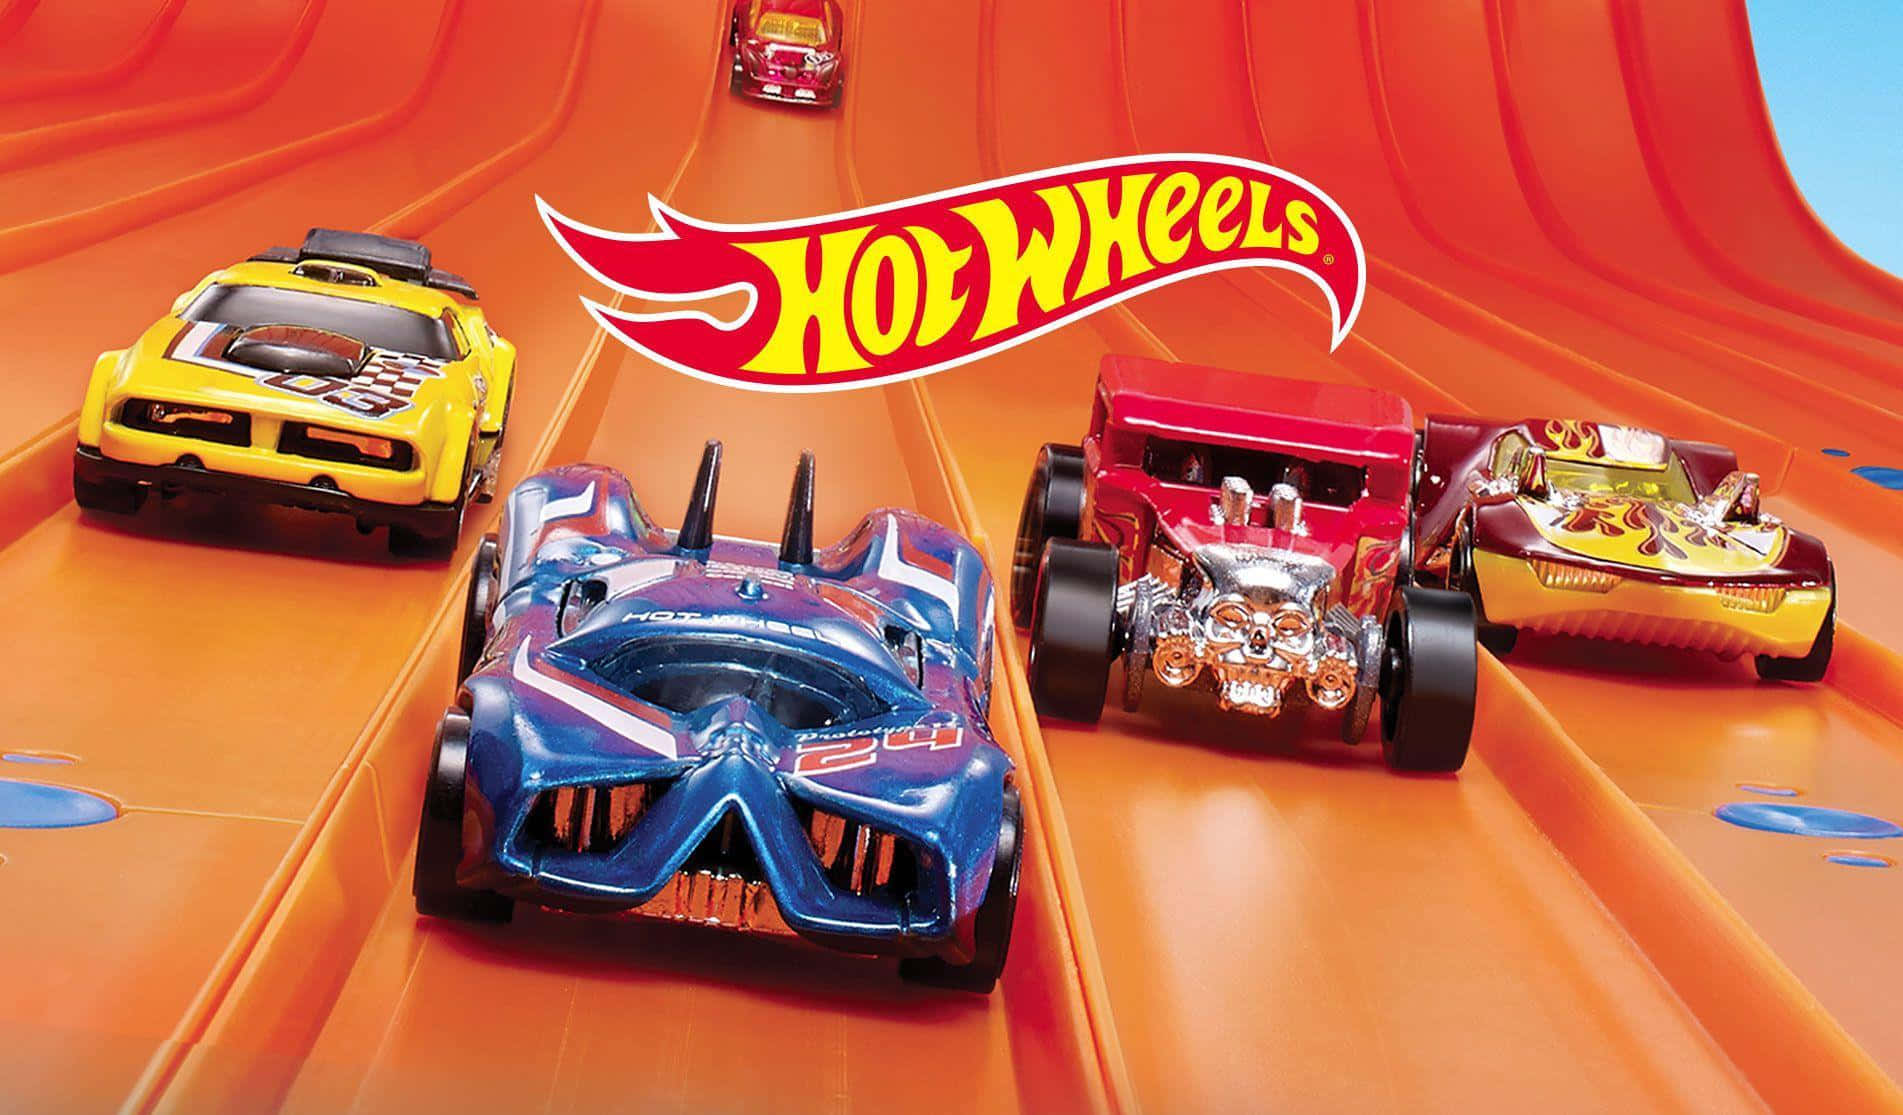 Hot Wheels - A Toy Car Race On An Orange Track